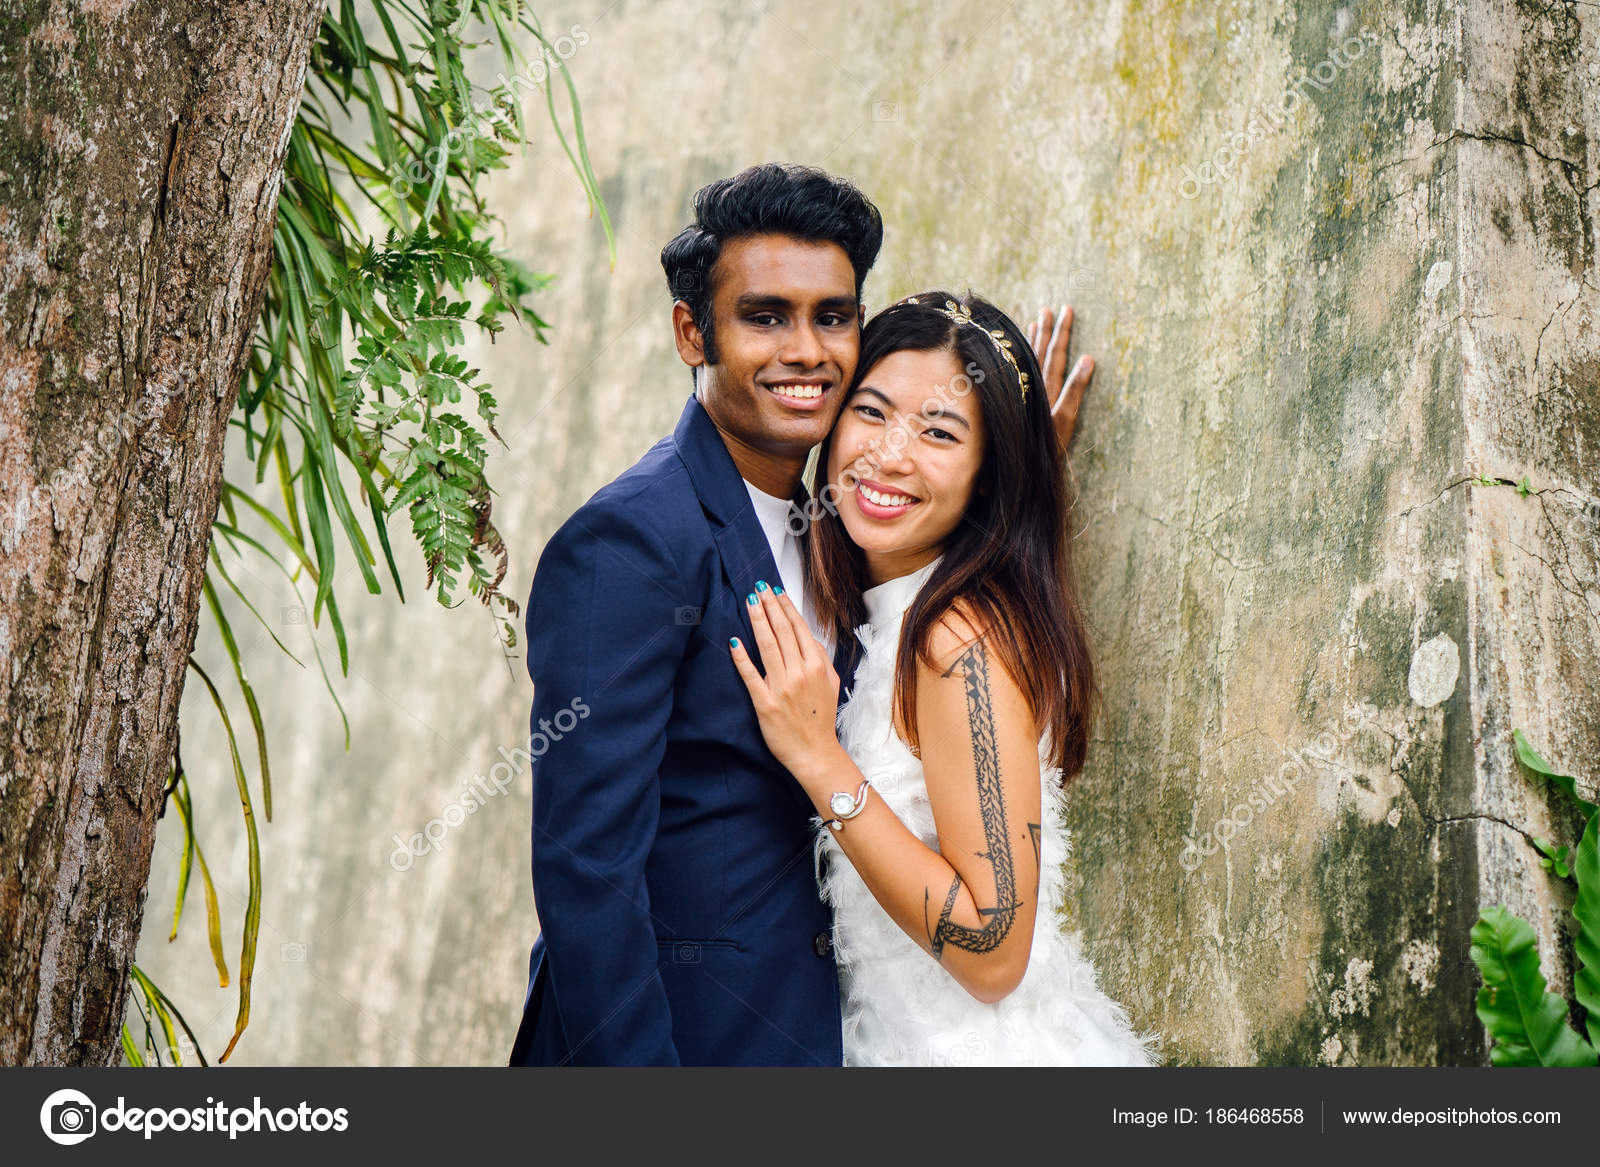 Just perfect 👌👌 #tabassum ara | Couple photography poses, Couple  photoshoot poses, Photo poses for couples